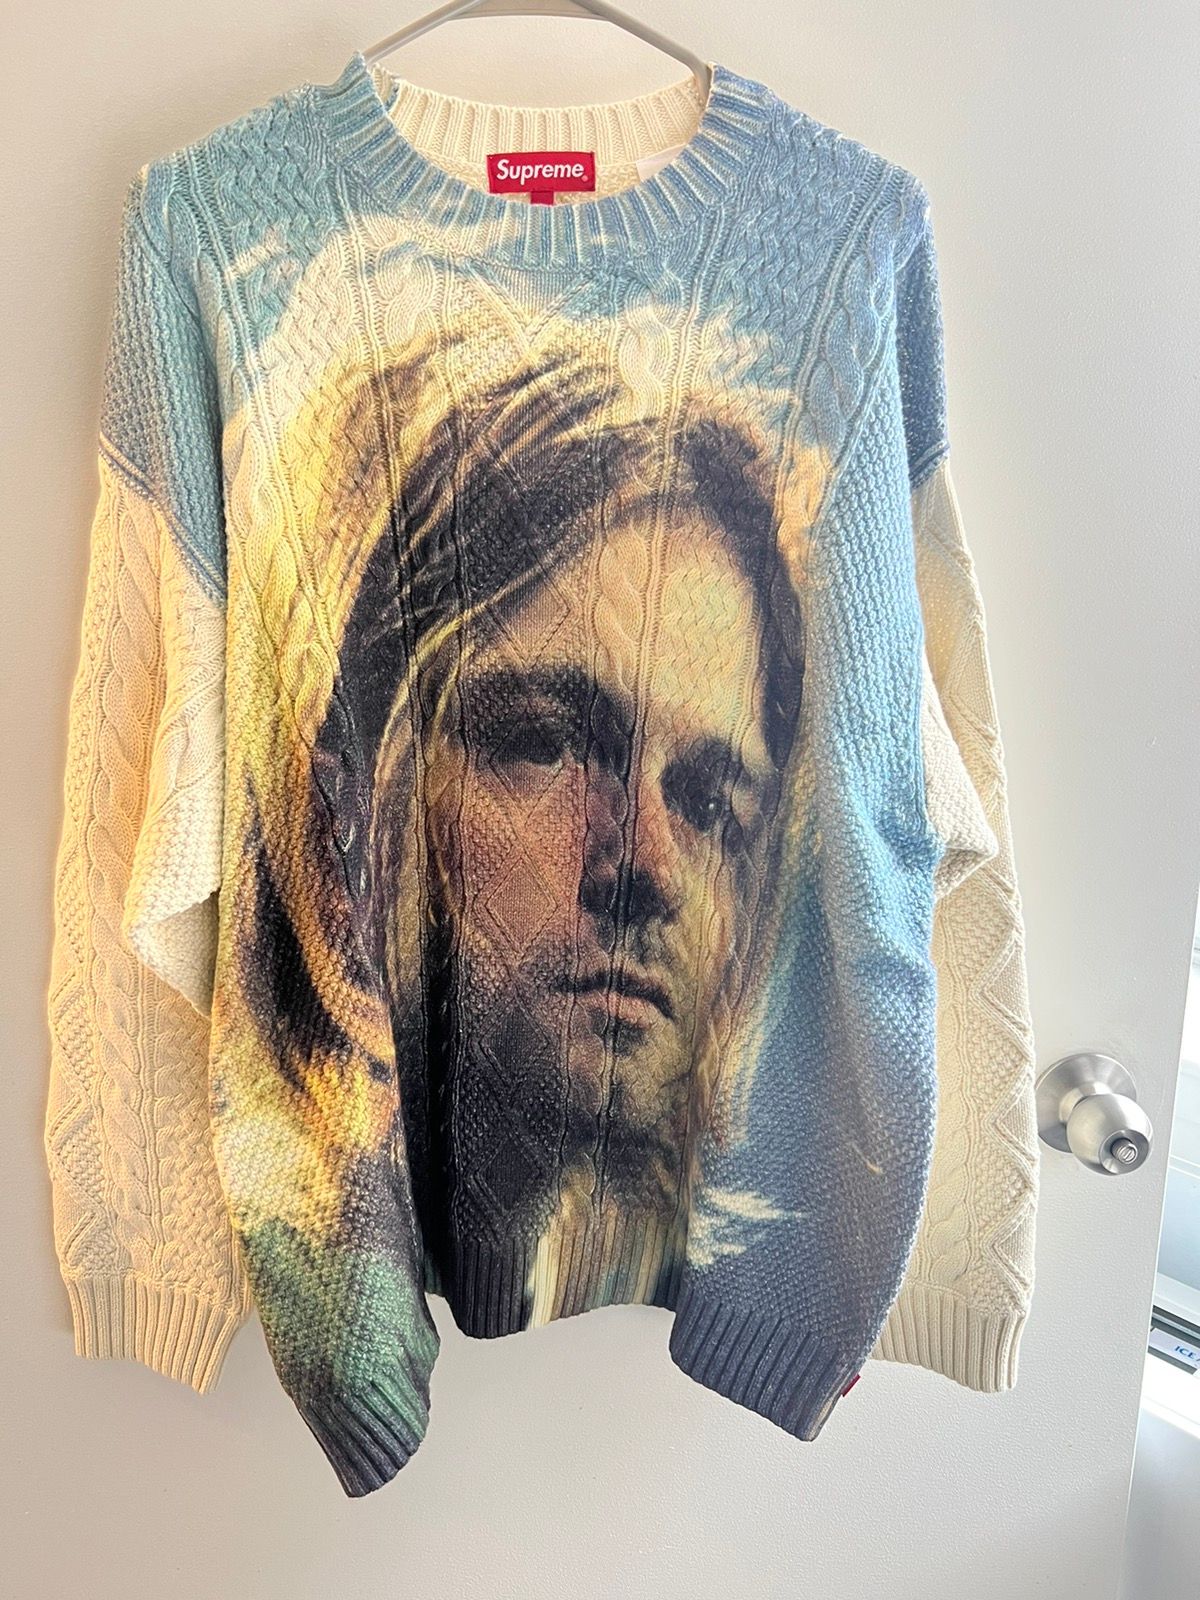 Supreme Supreme Kurt Cobain Sweater White Size Large | Grailed